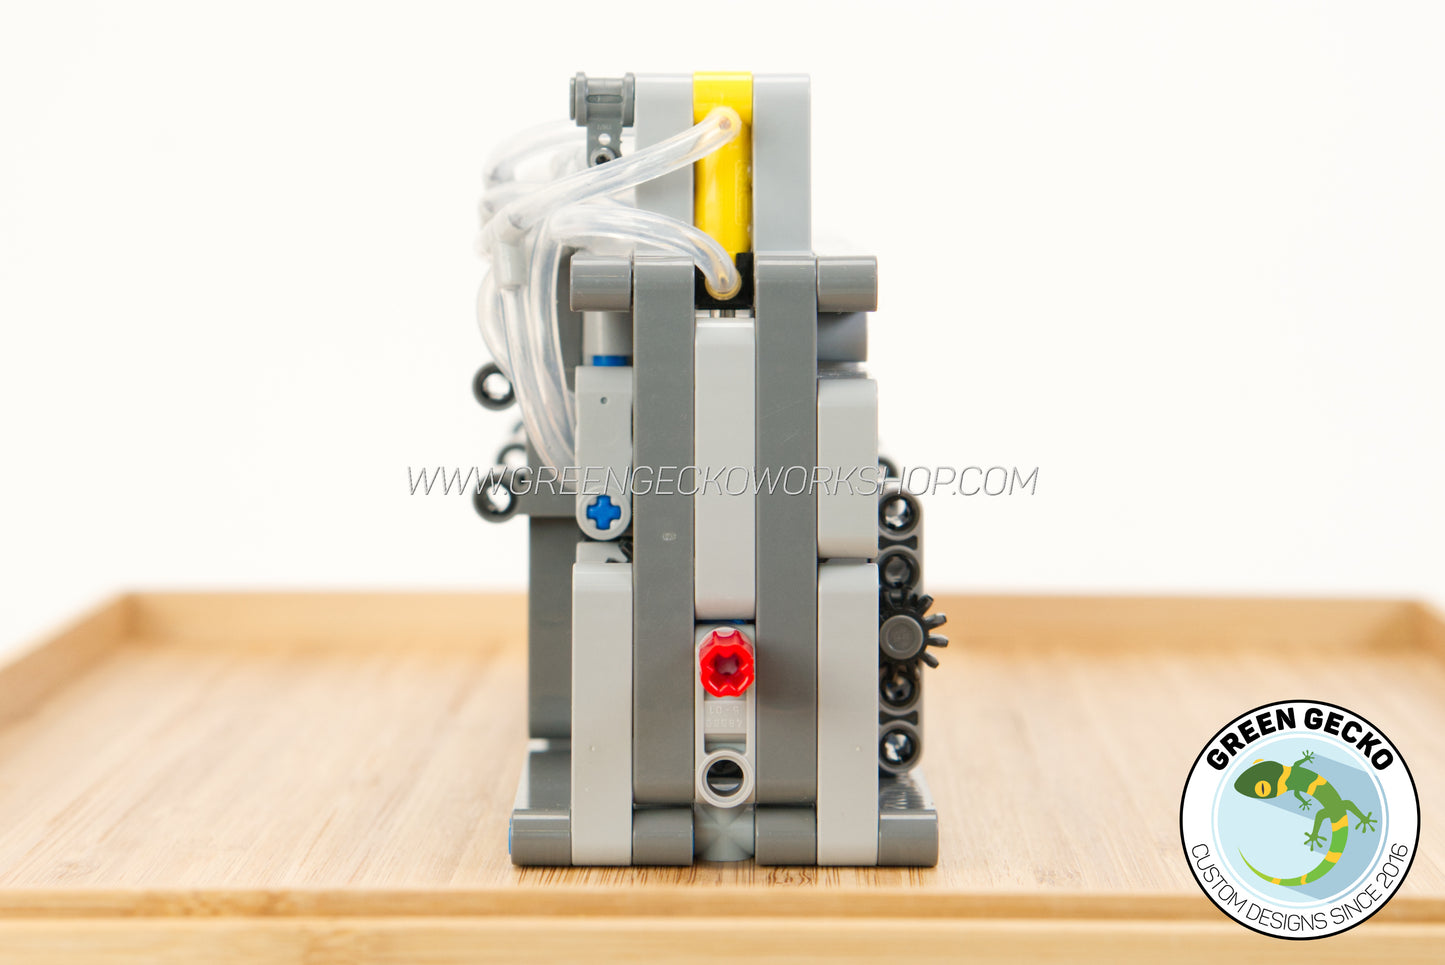 Pro Anleitung – MK2 6-Zylinder-Lego-Pneumatikmotor – Inline 6 – 2000 U/min